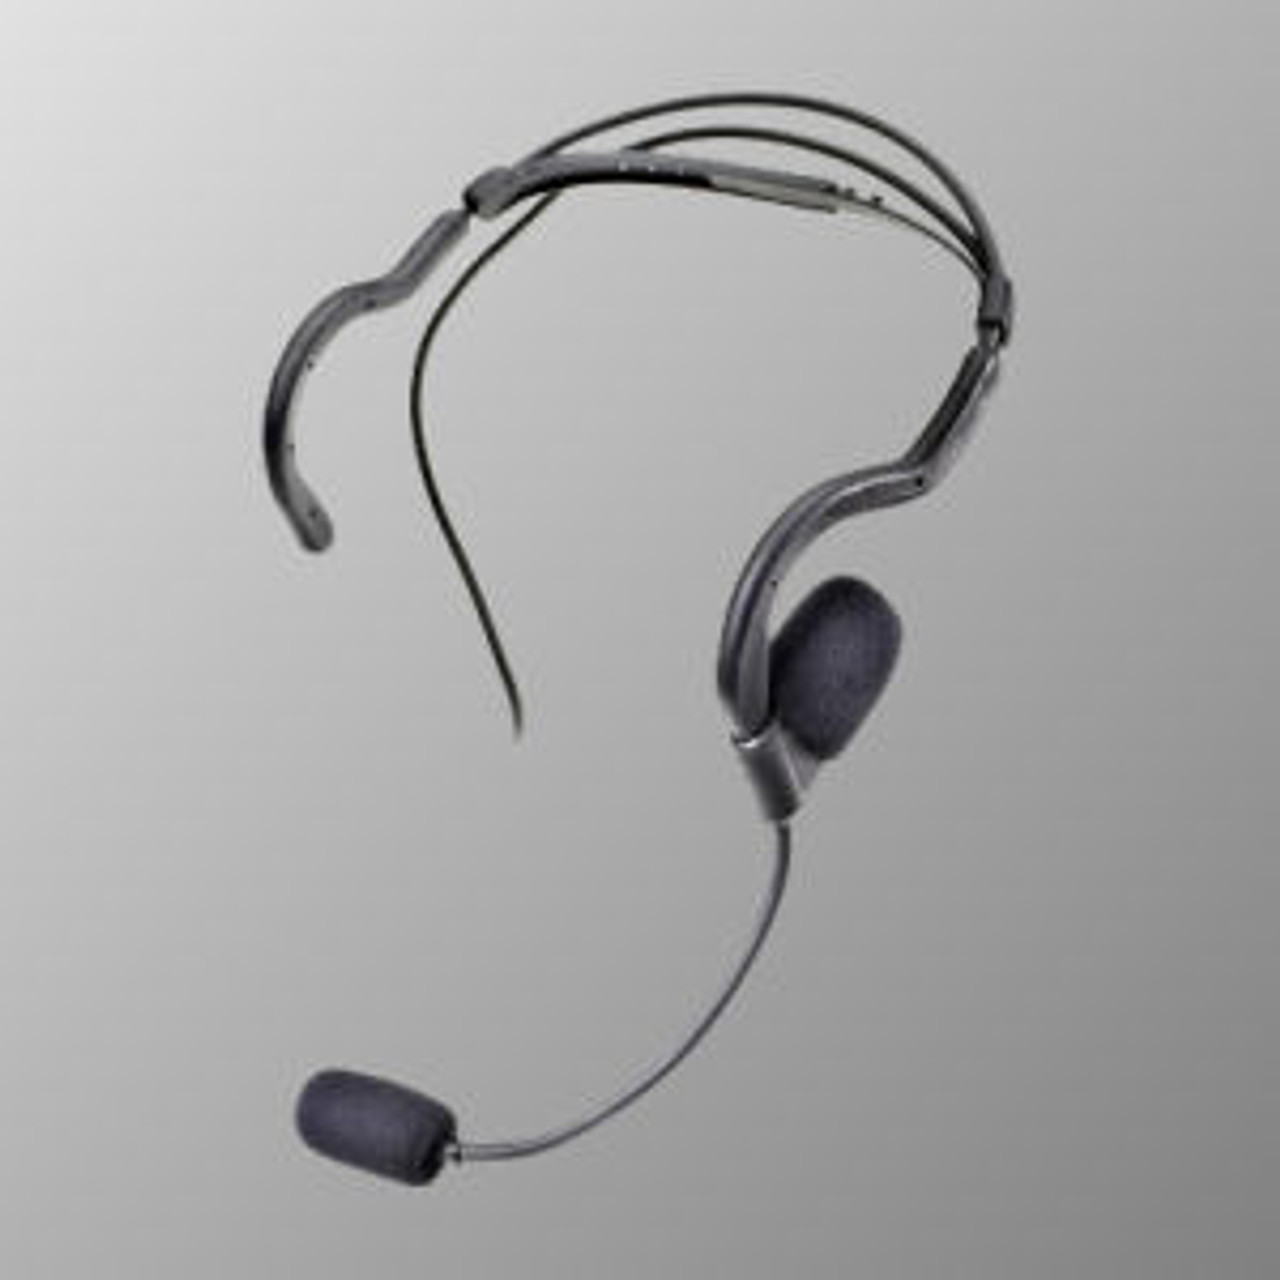 ICOM V80 Tactical Noise Canceling Single Muff Headset